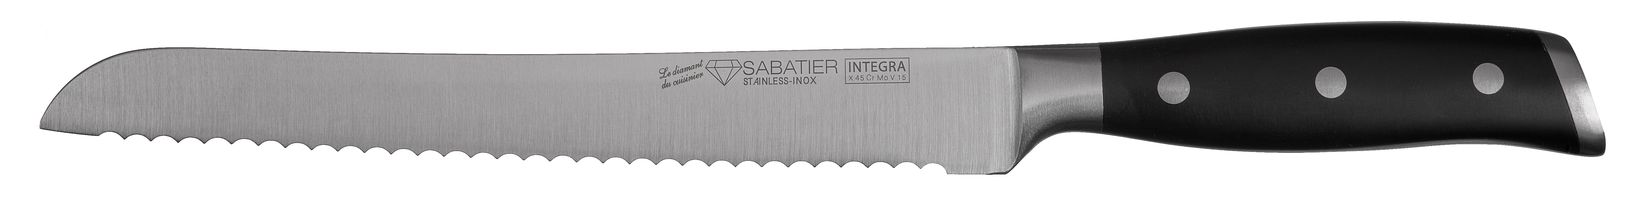 Diamant Sabatier Bread Knife Integra 22 cm